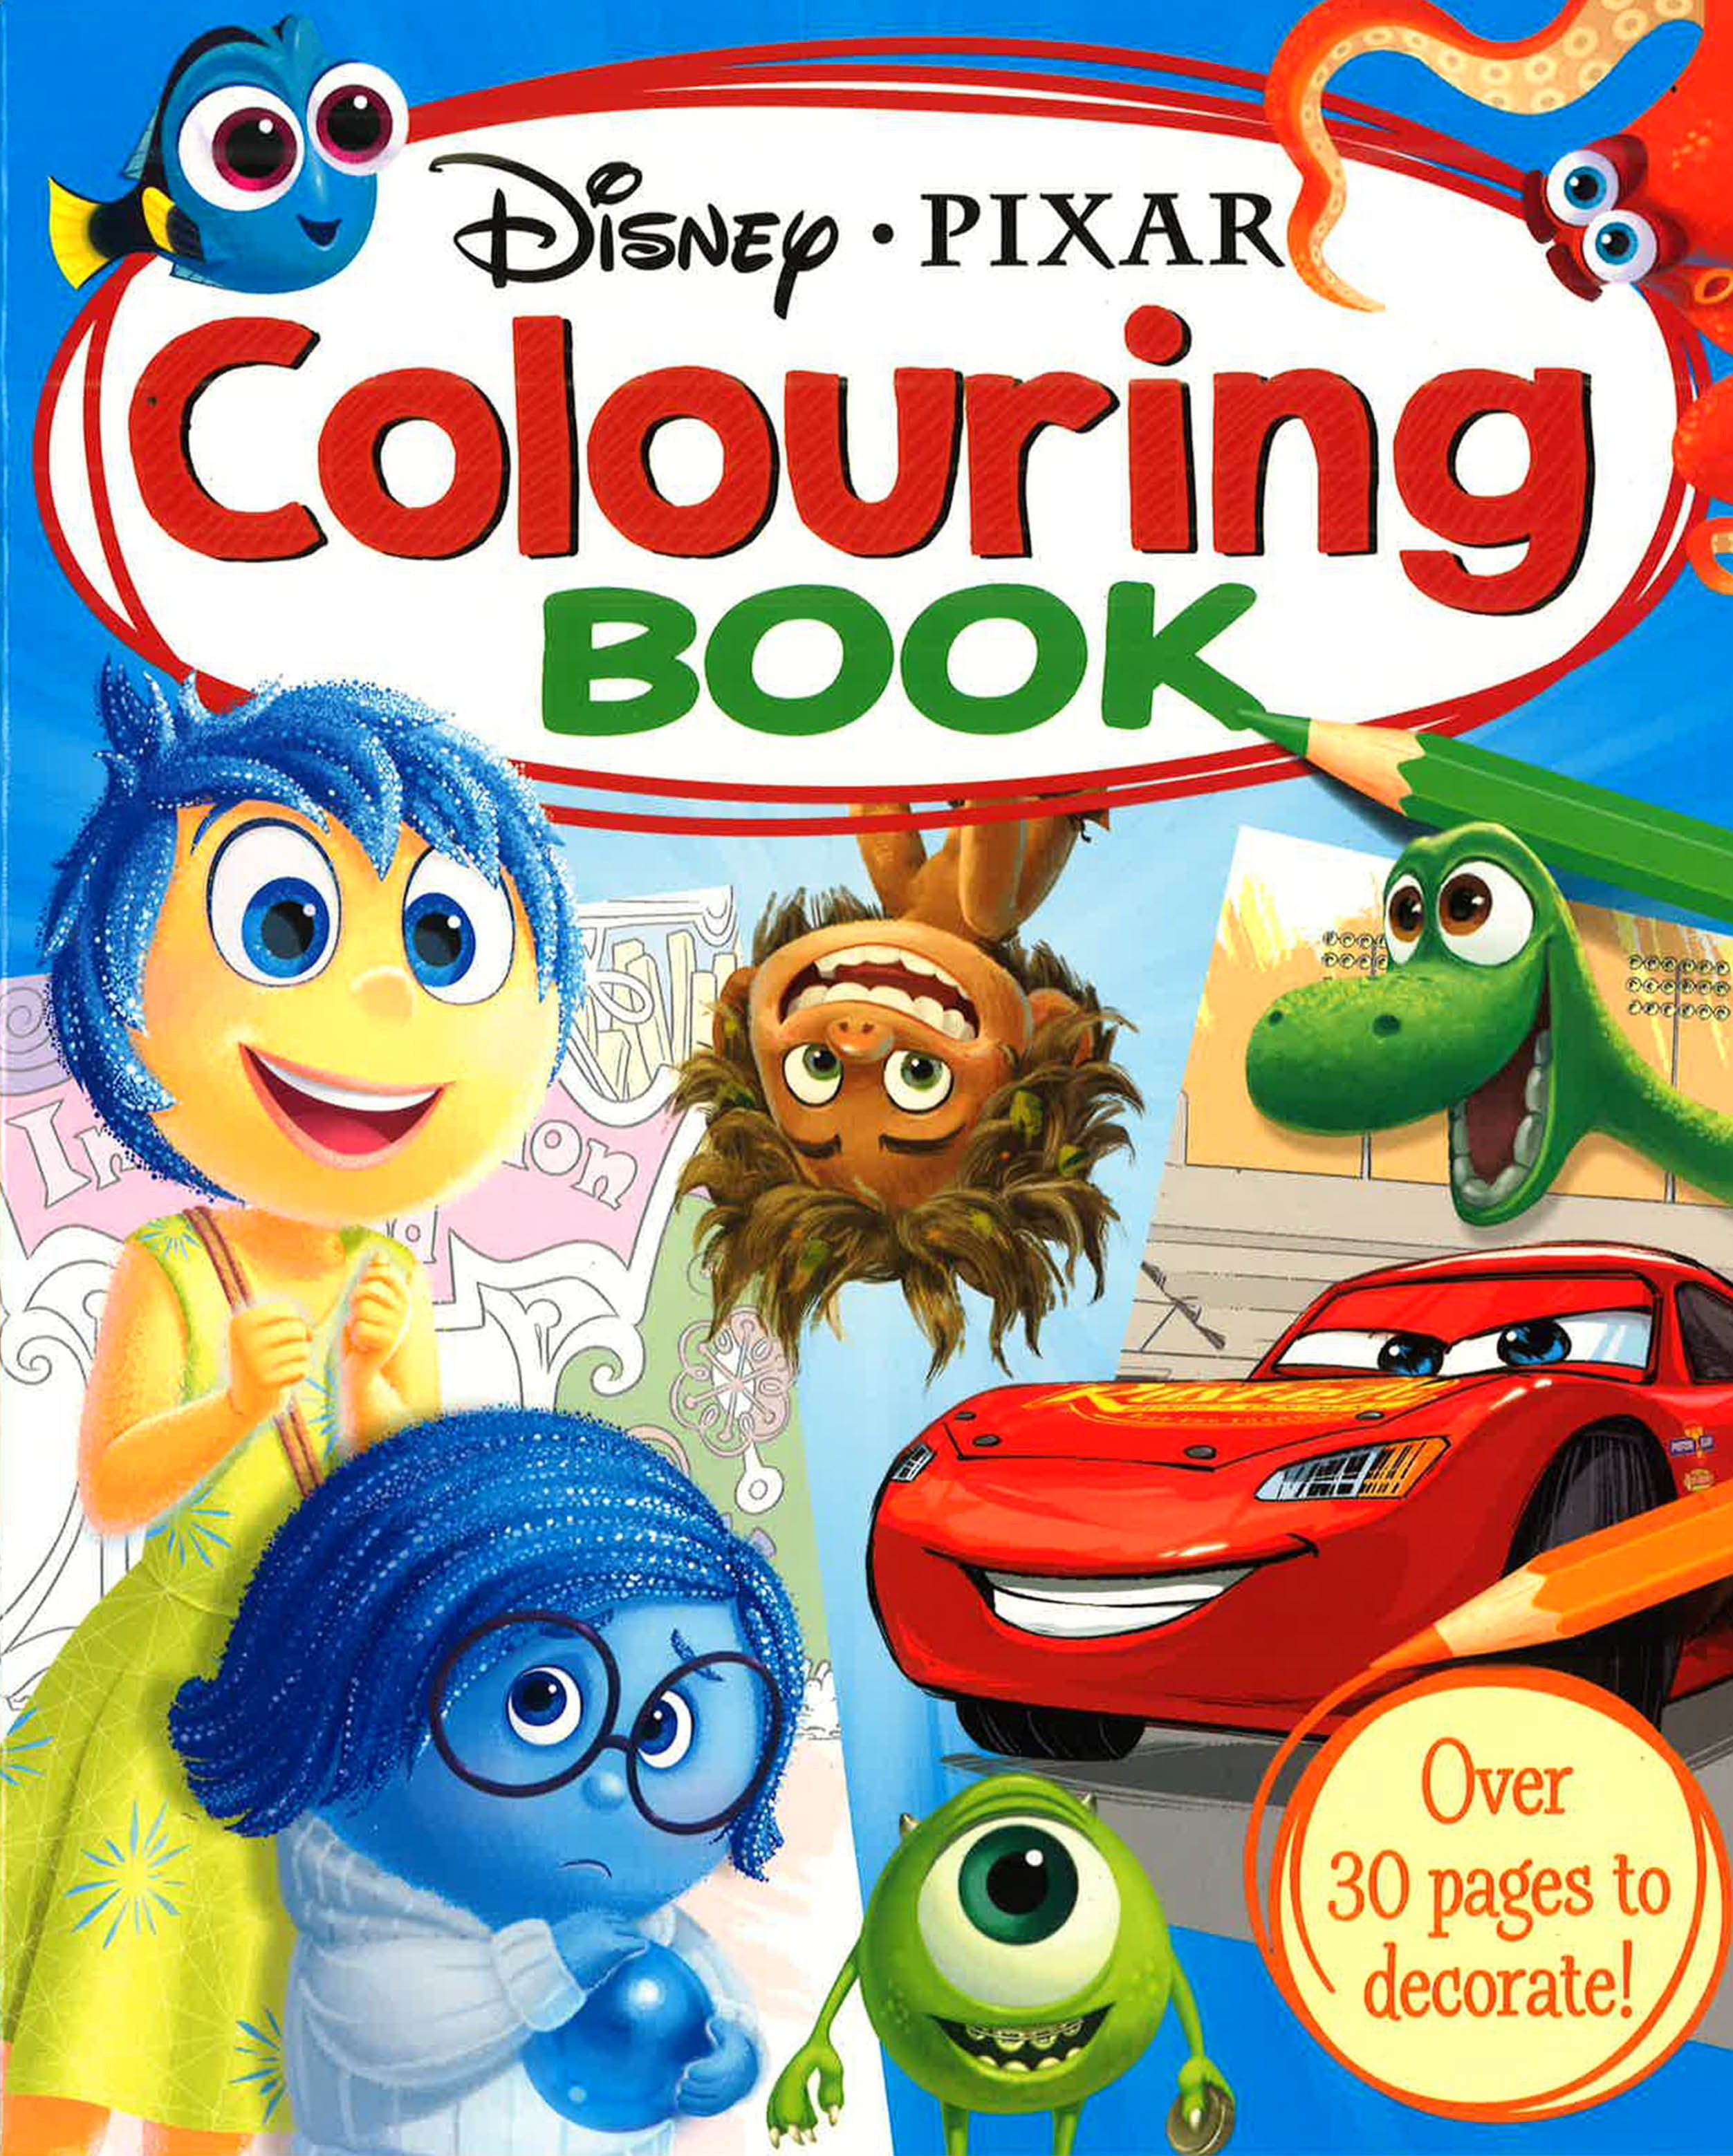 Disney Mystery Coloring Book, Pixar